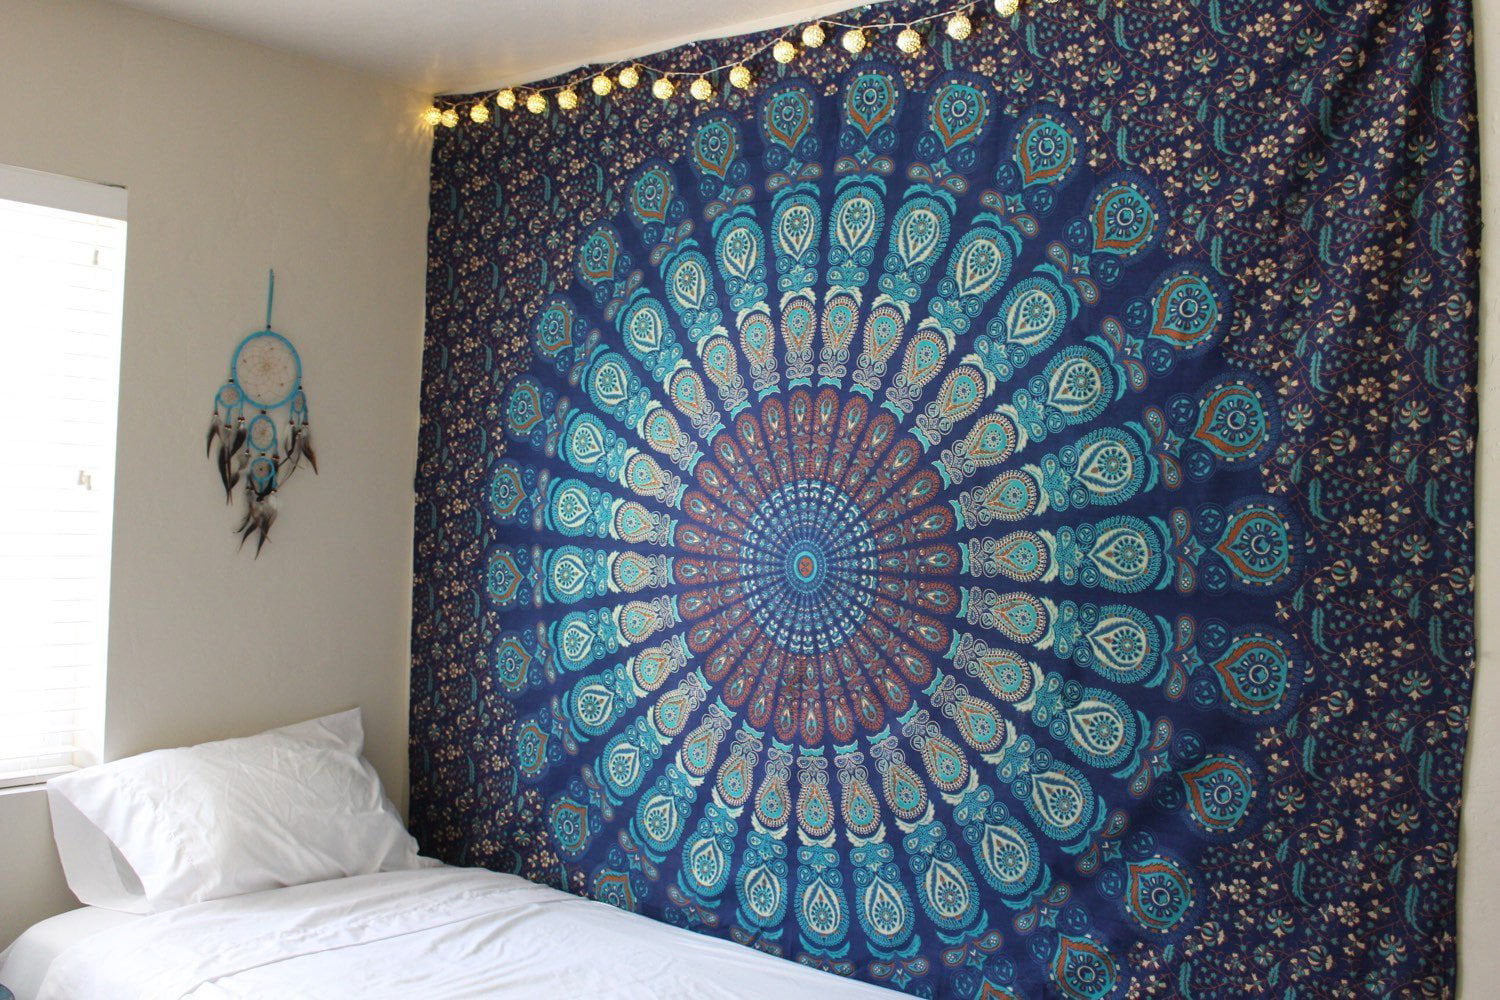 Sun & Moon Face Tapestry Wall Hanging Mandala Blanket Throw Home Dorm Decor New 